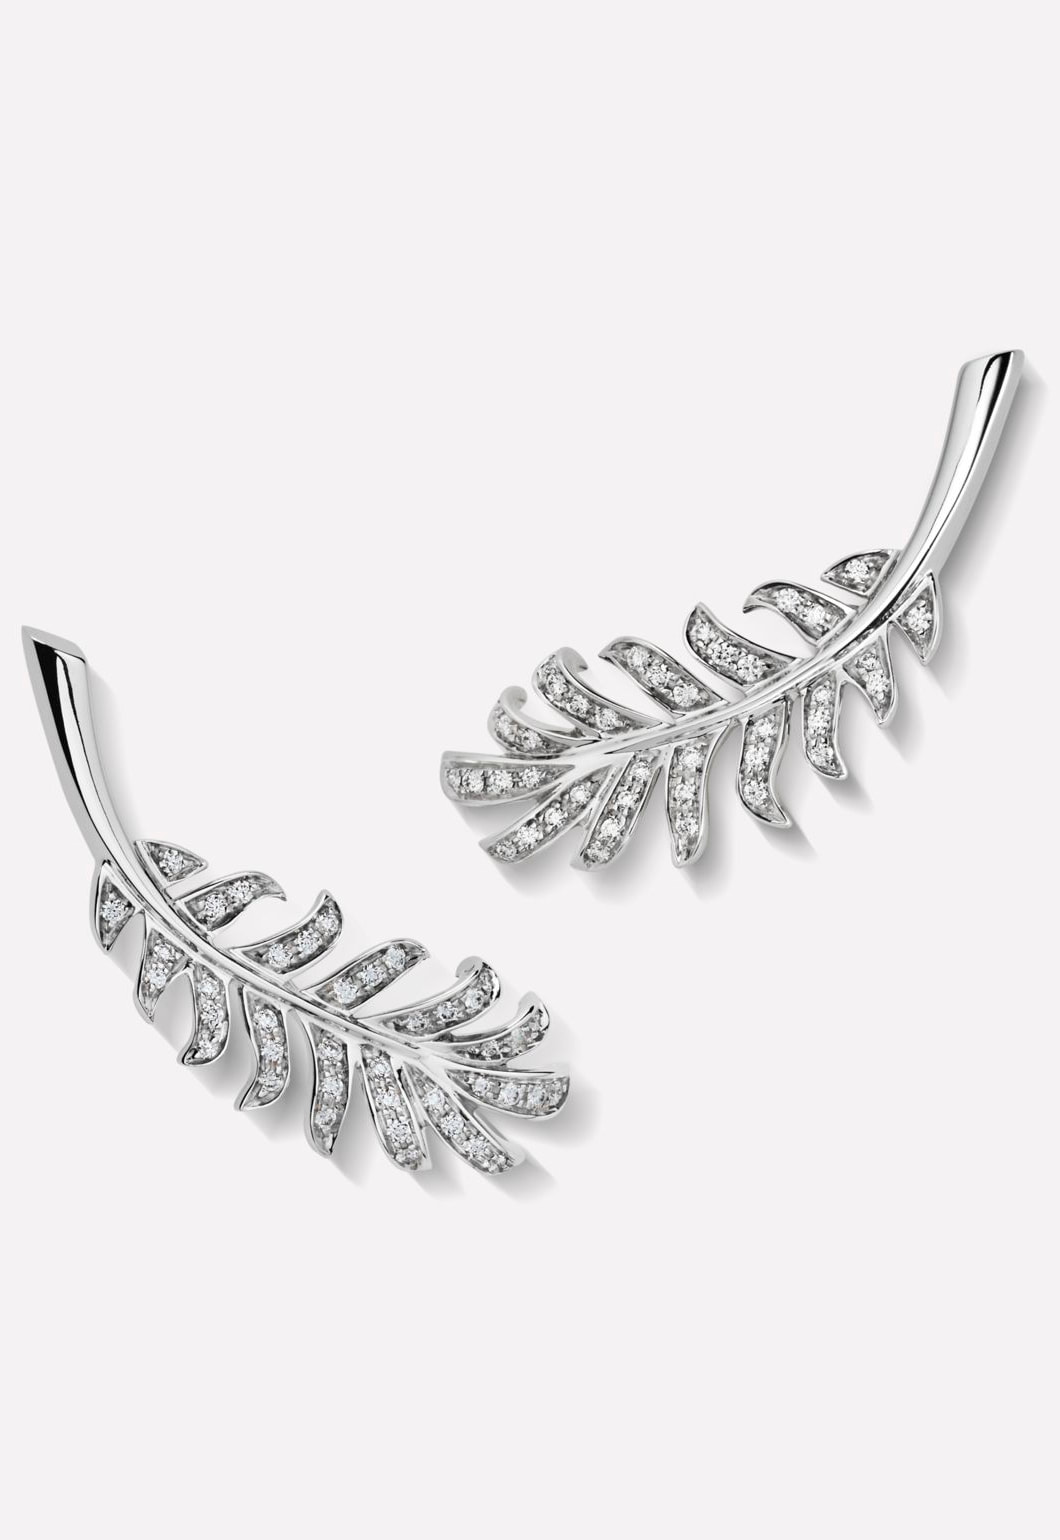 Chanel 'Plume' white gold diamond earrings